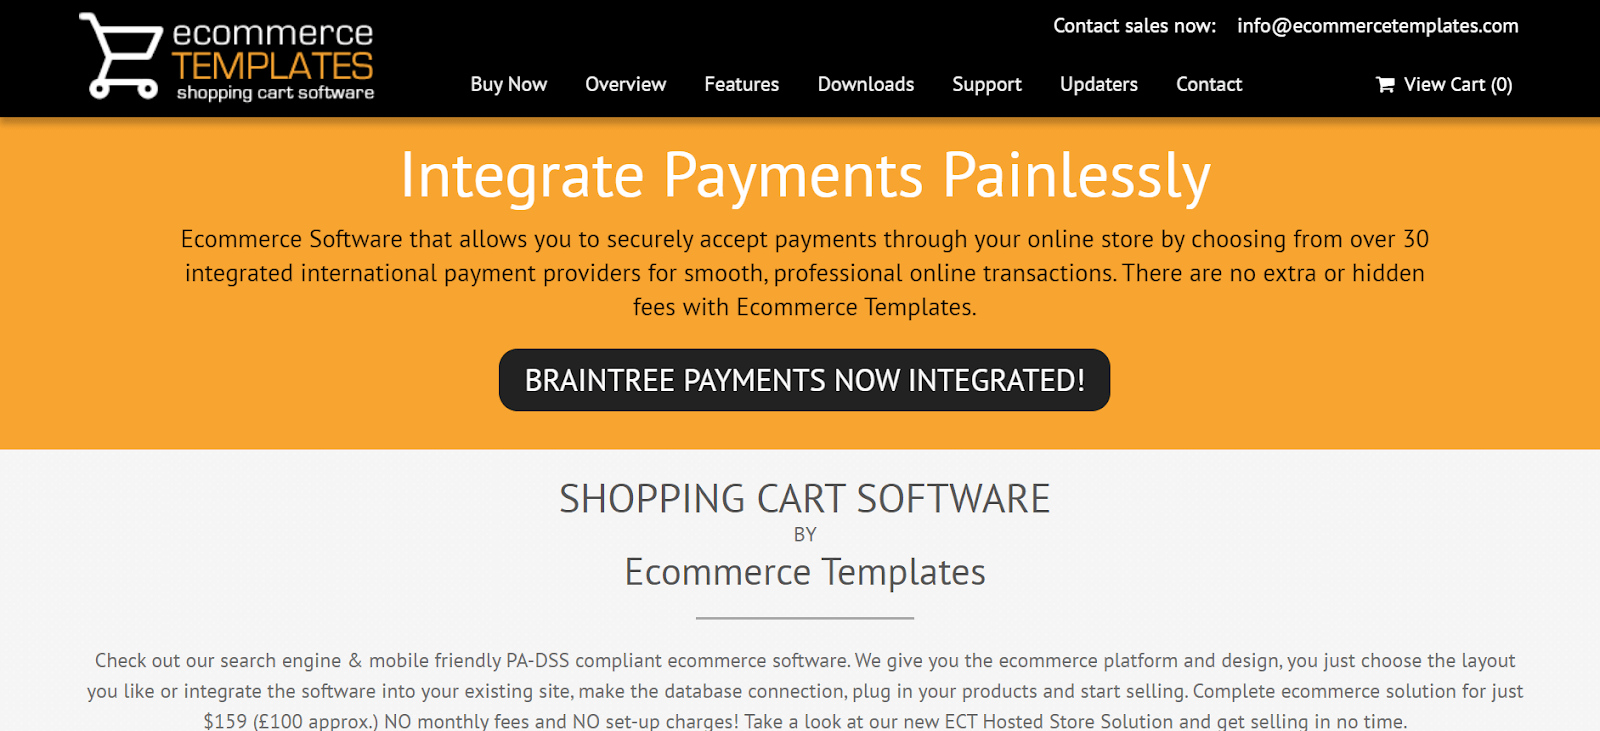 Ecommerce-Templates-Best-eCommerce-tools